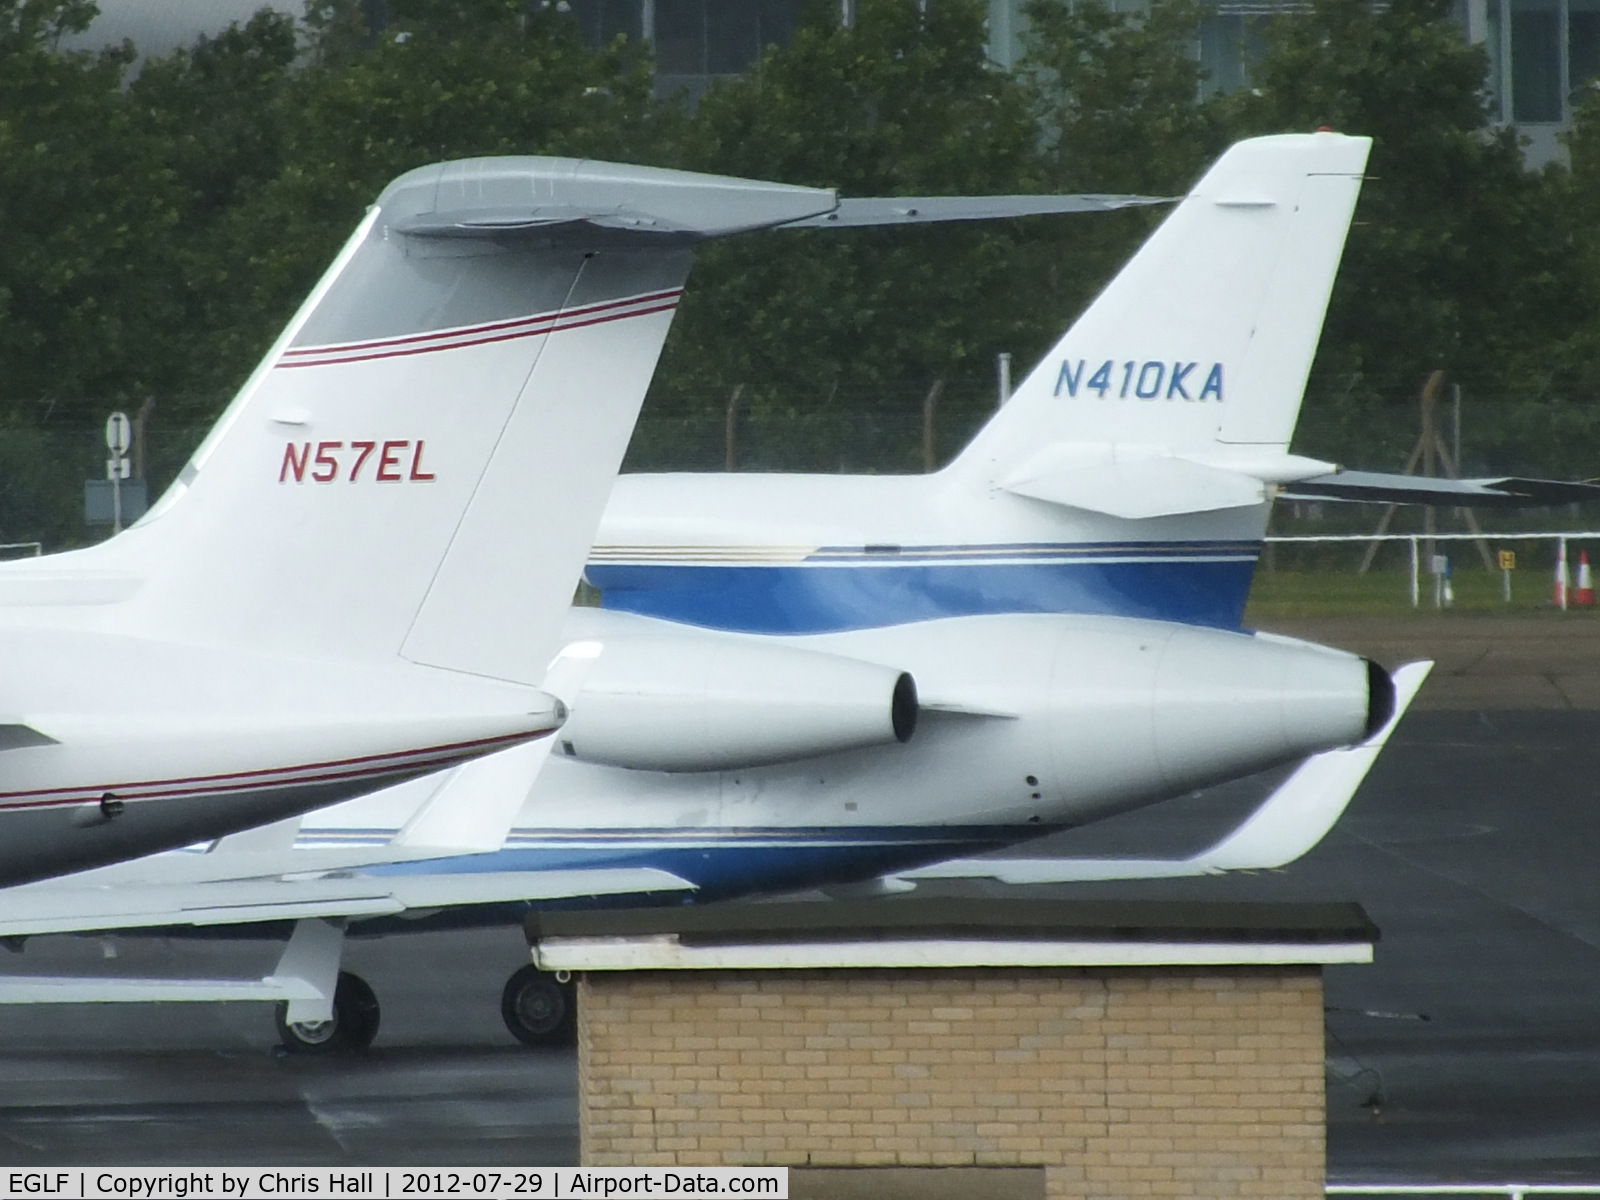 Farnborough Airfield Airport, Farnborough, England United Kingdom (EGLF) - Dassault Falcon 2000EX N57EL and Dassault Falcon 900 N410KA